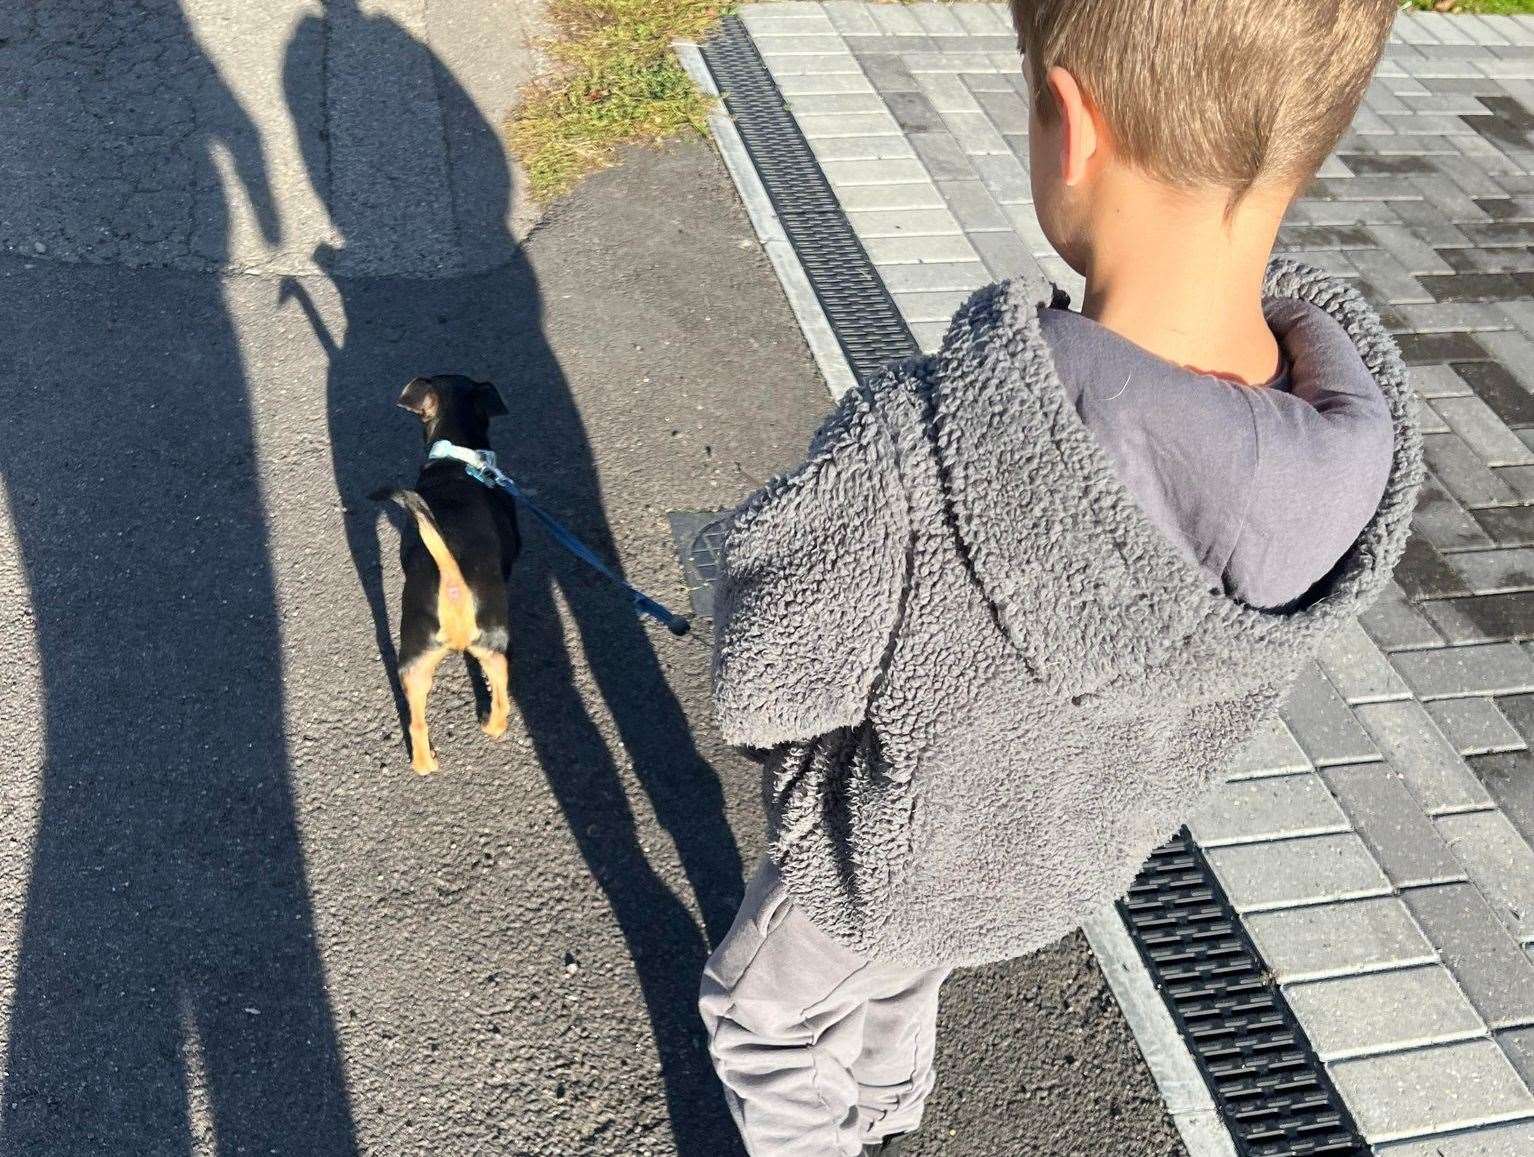 Four-year-old Addison loved walking dog Milo